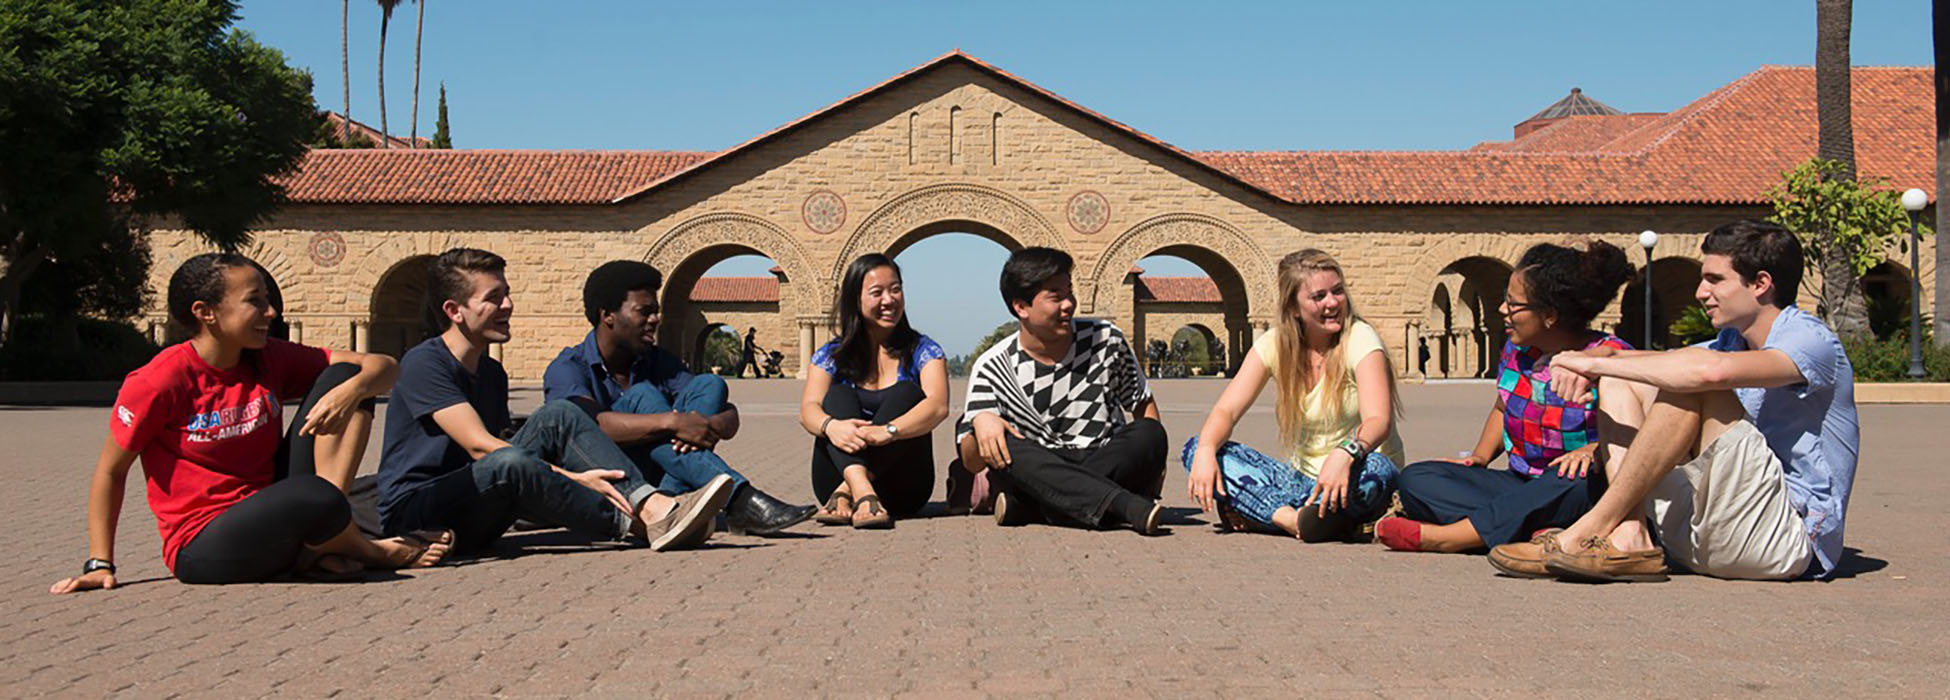 Stanford University.